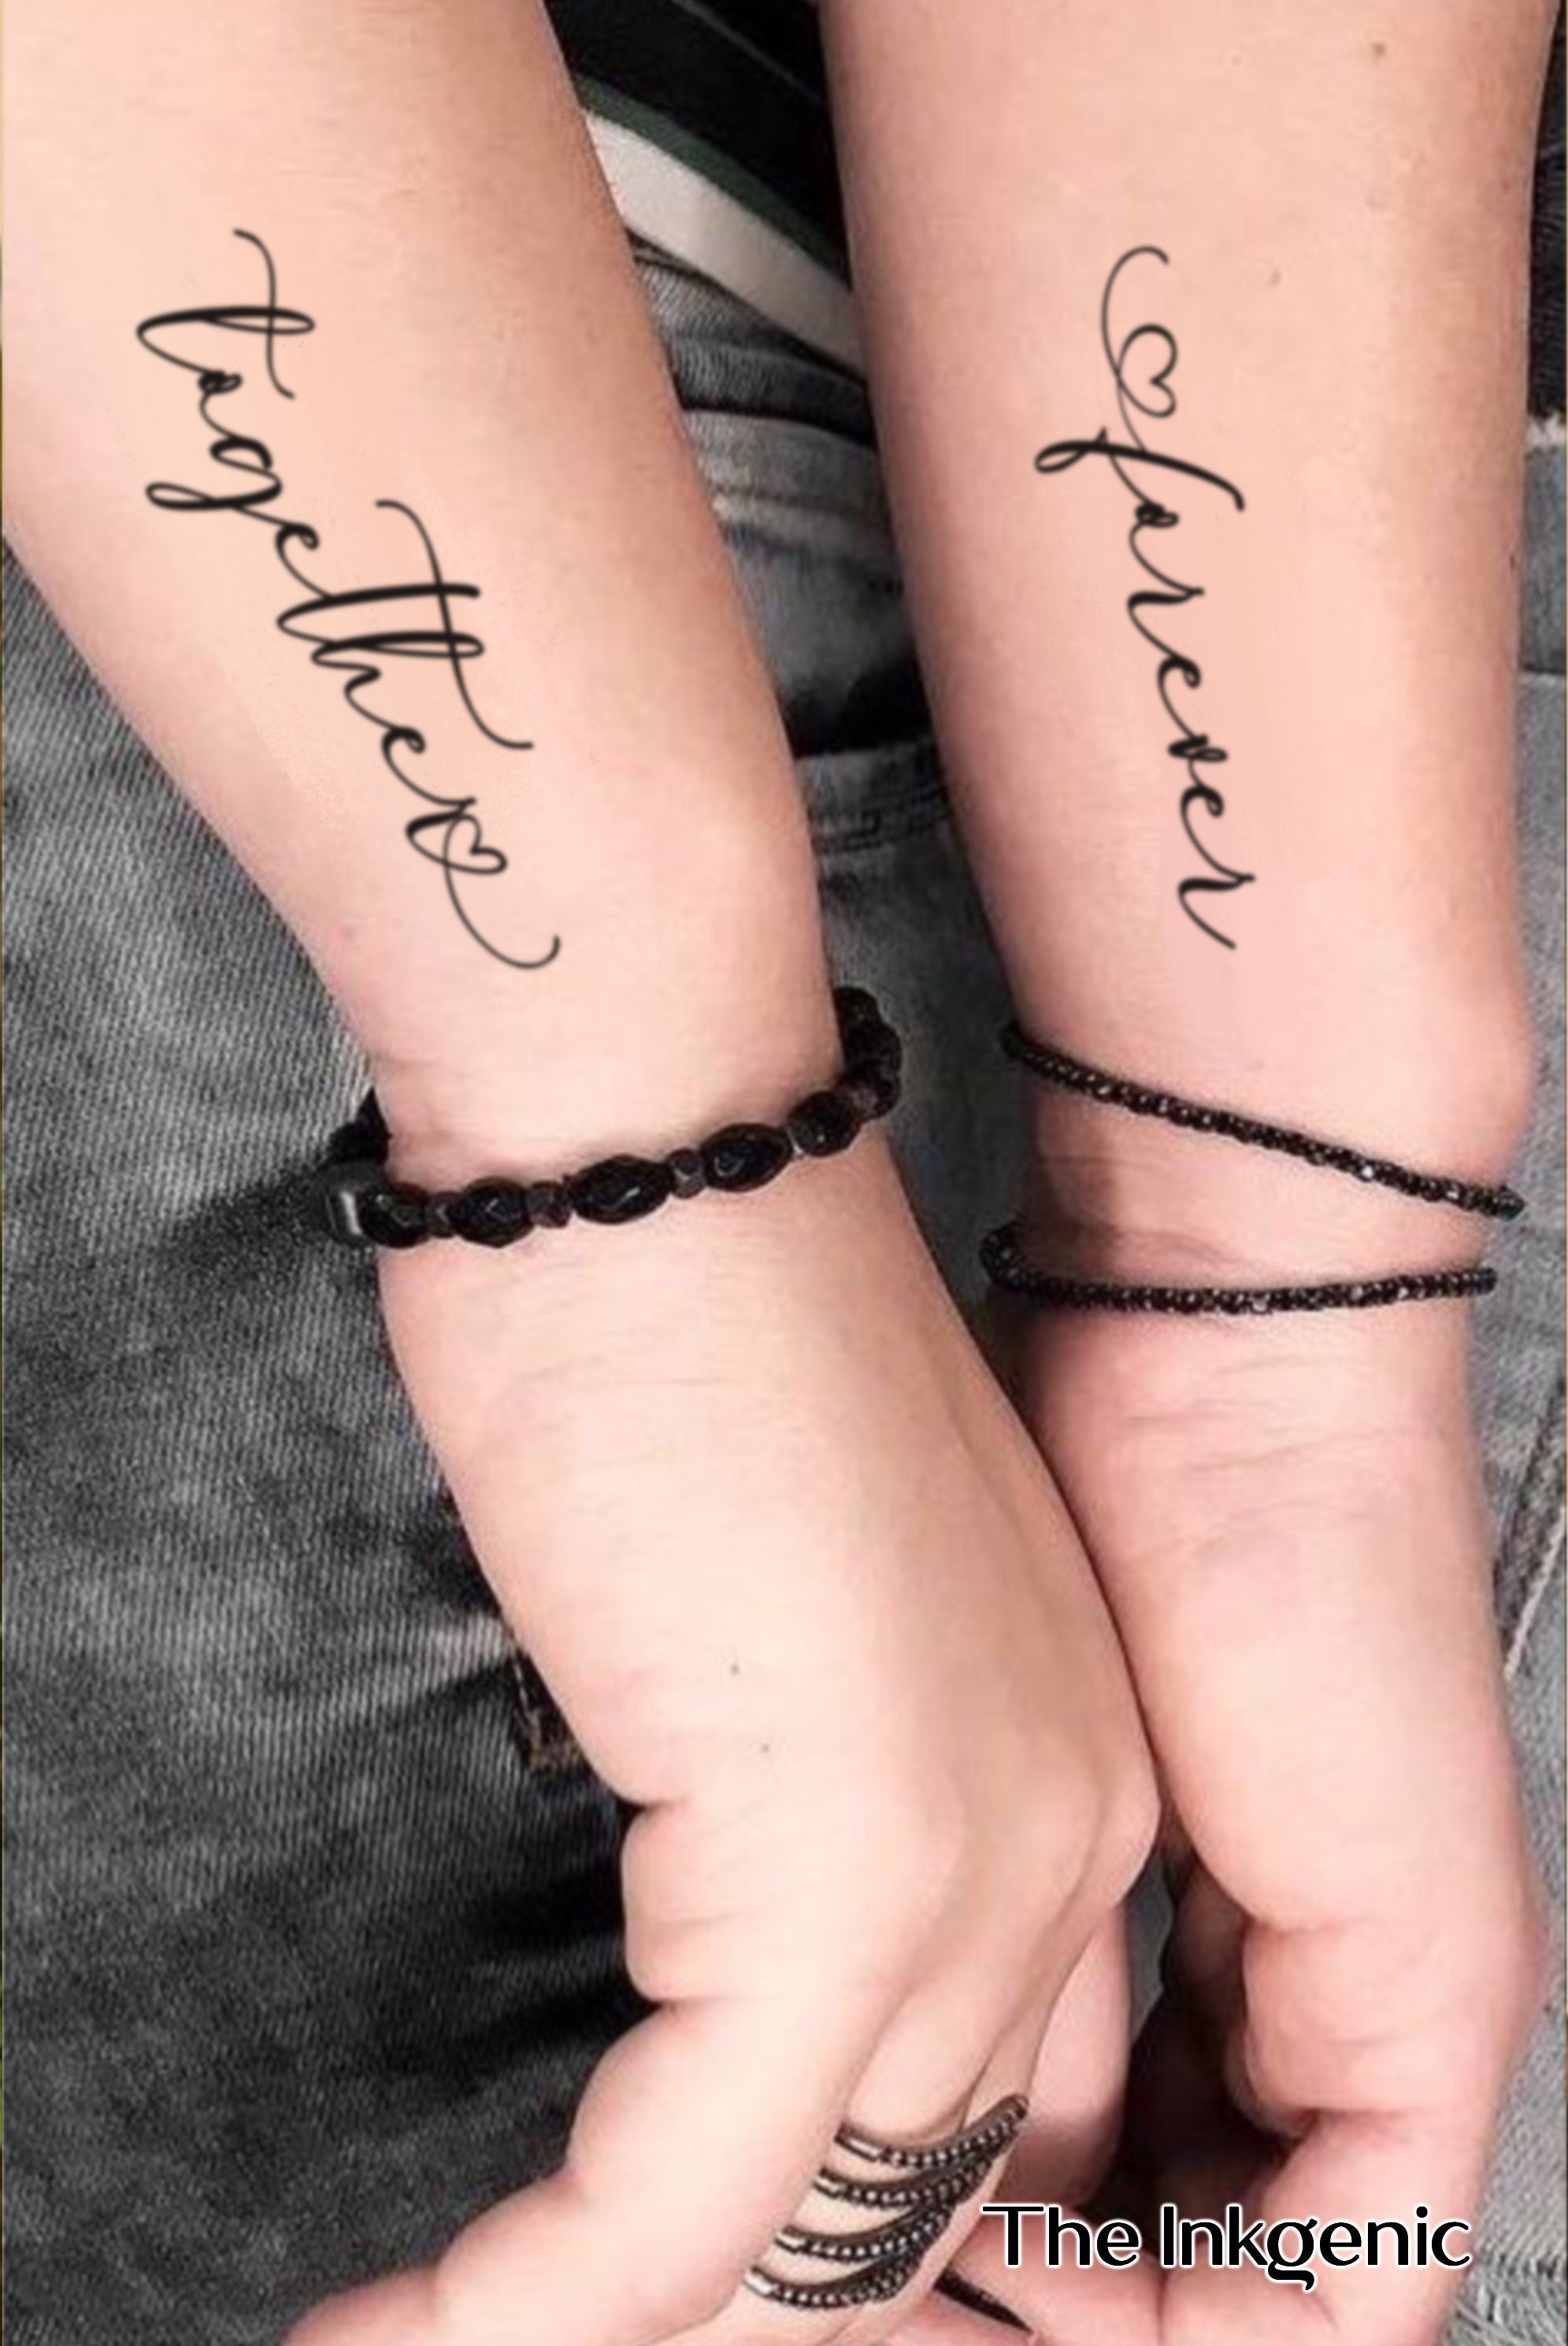 together tattoos